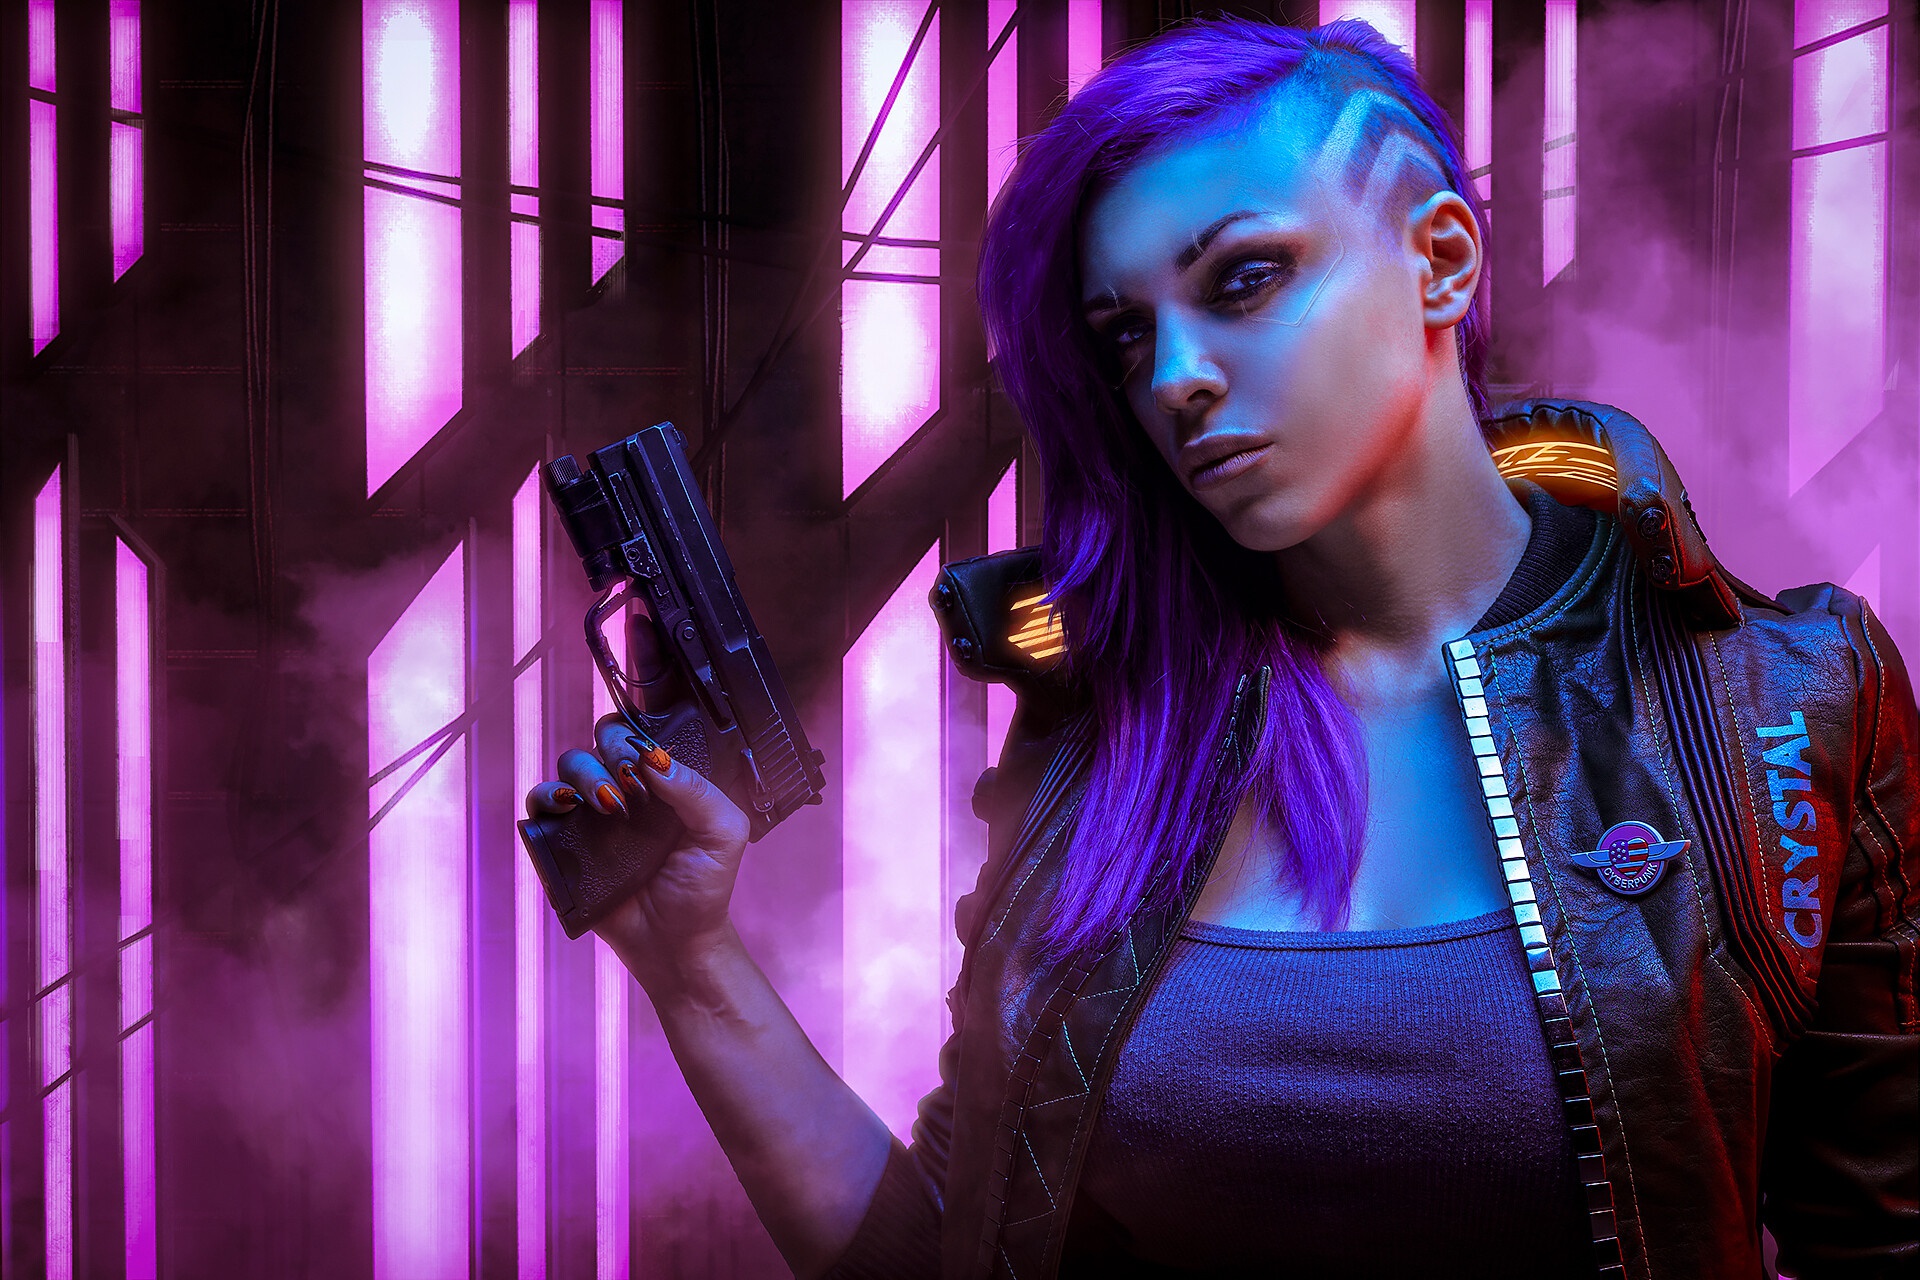 cyberpunk 2077, video game, gun, purple hair